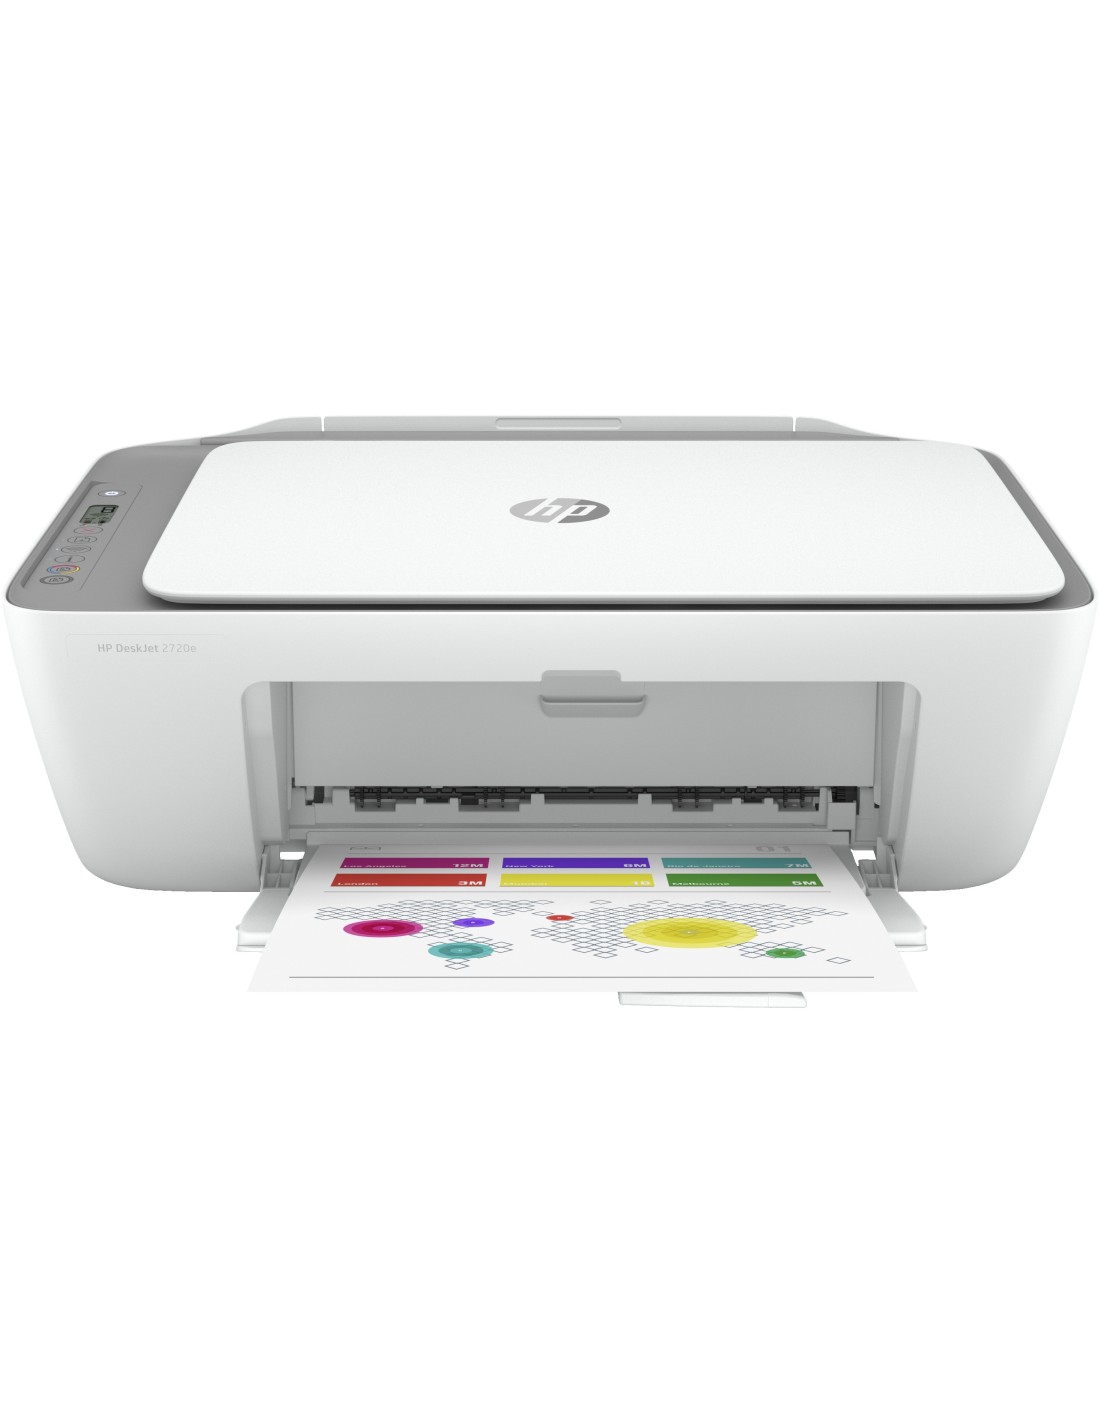 HP DeskJet Impresora multifunción 2720e, Color, Impresora para